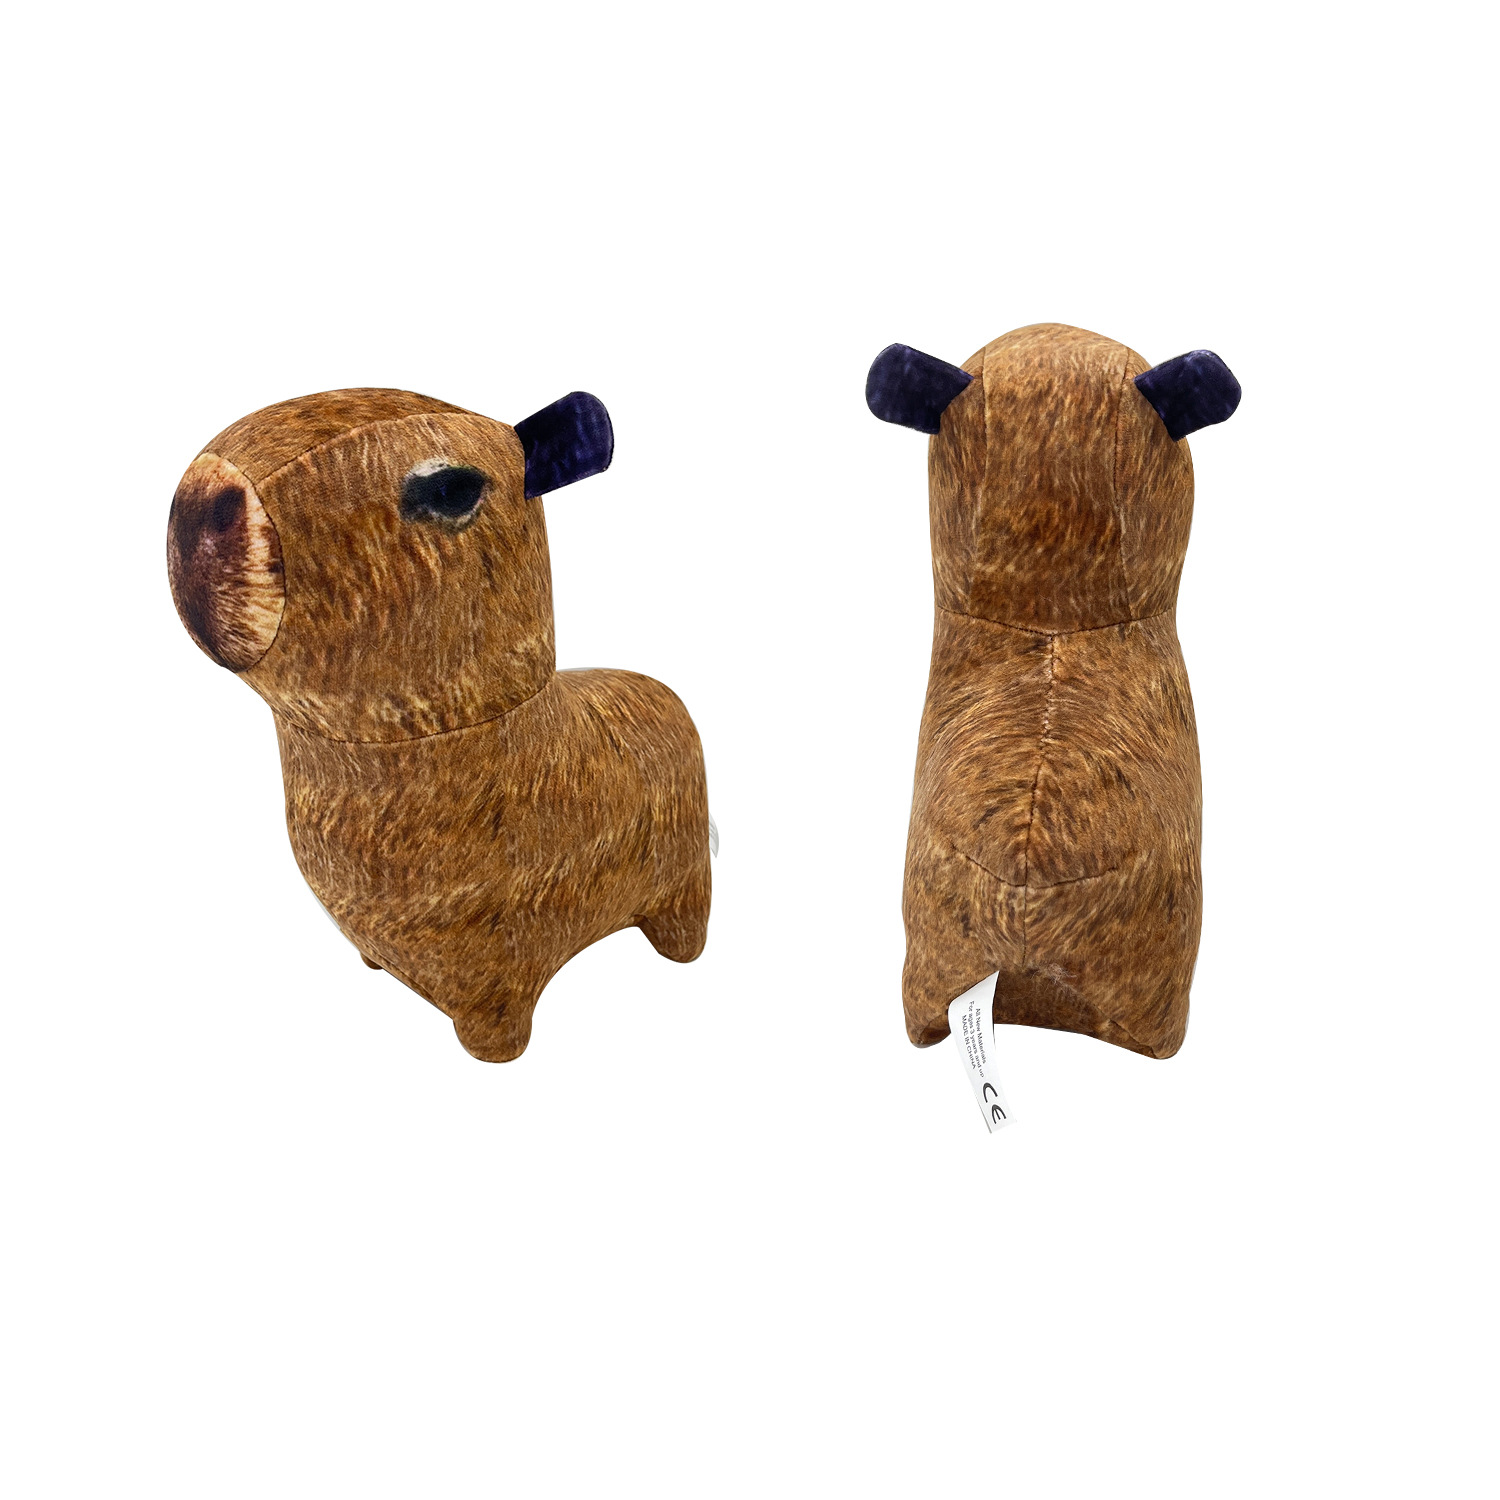 Capybara Plush doll 20cm